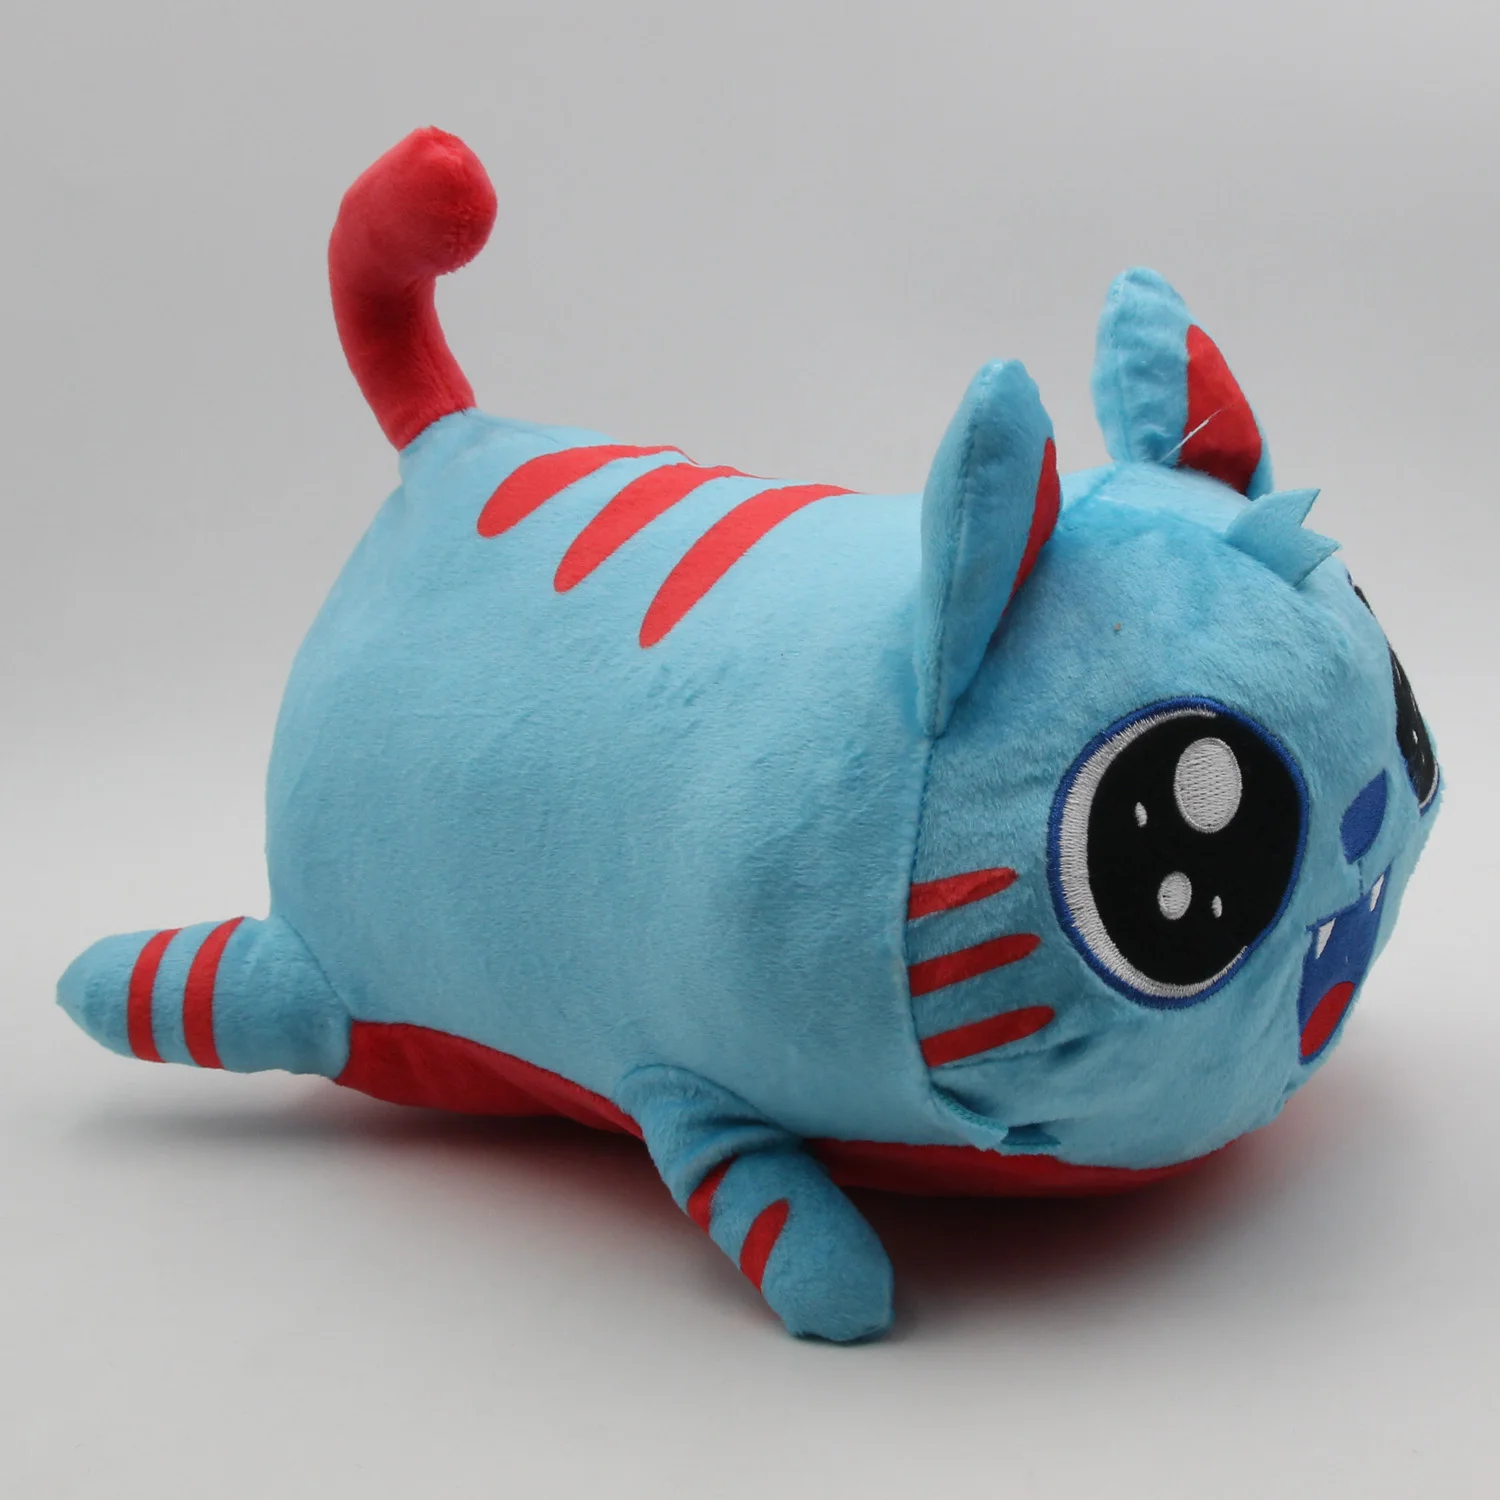 25cm New Gravycatman Plush Toy Cute Stuffed Animals Kawaii Plushie